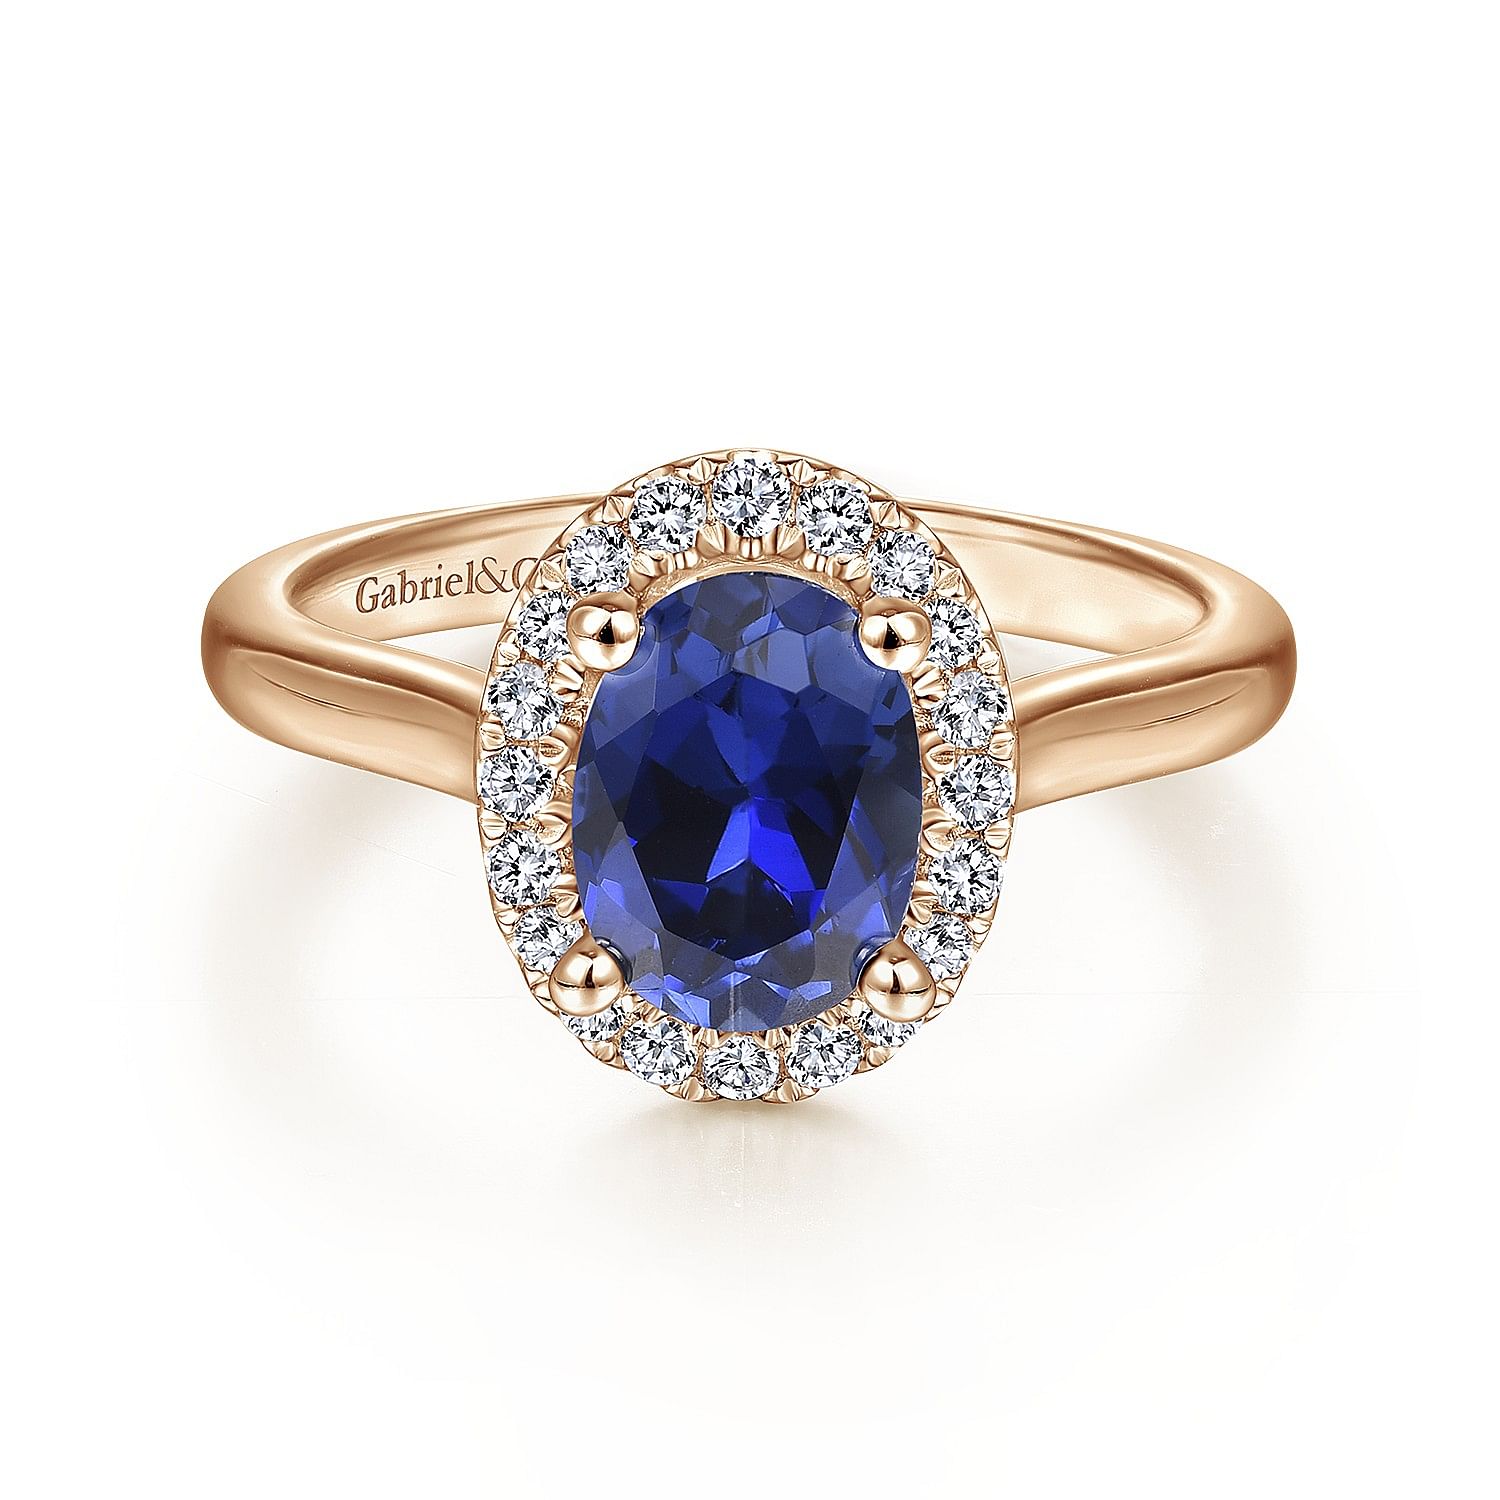 Jordana - 14K Rose Gold Oval Halo Diamond and Sapphire Engagement Ring